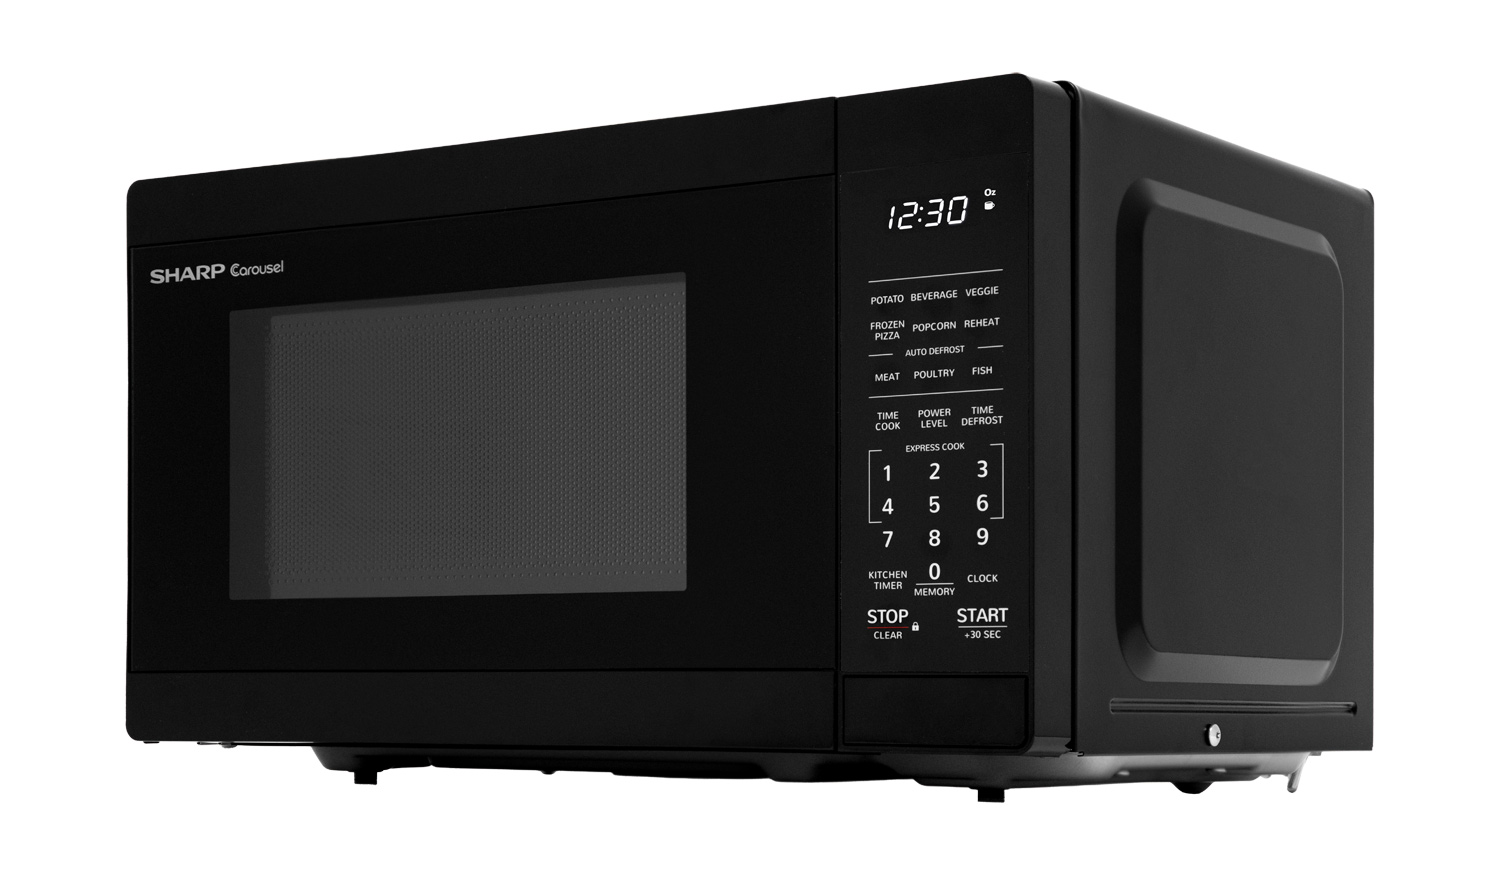 0.7 Cu. Ft. Countertop Microwave Oven 700 Watts Black Microwave